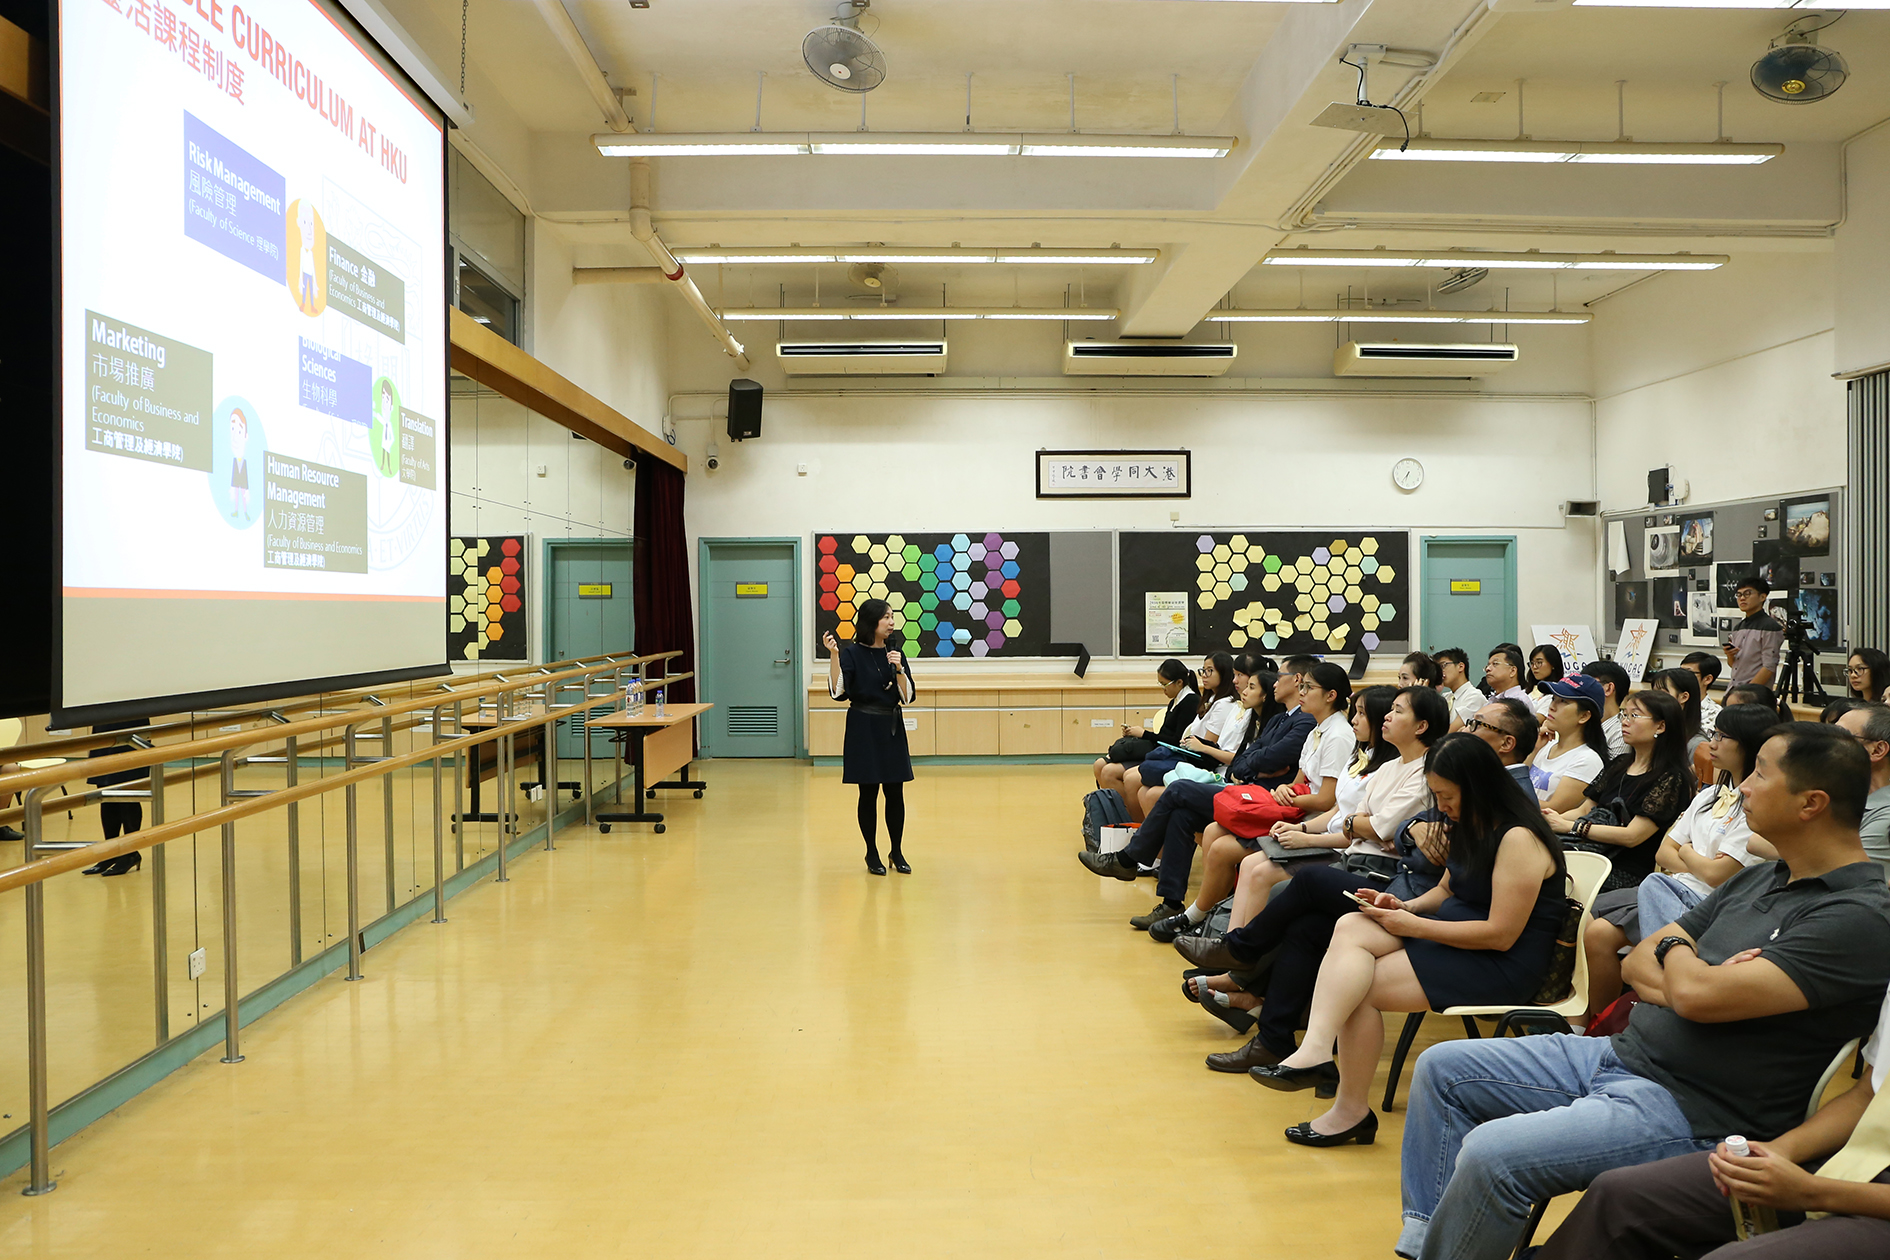 Seminars held in the activity centre